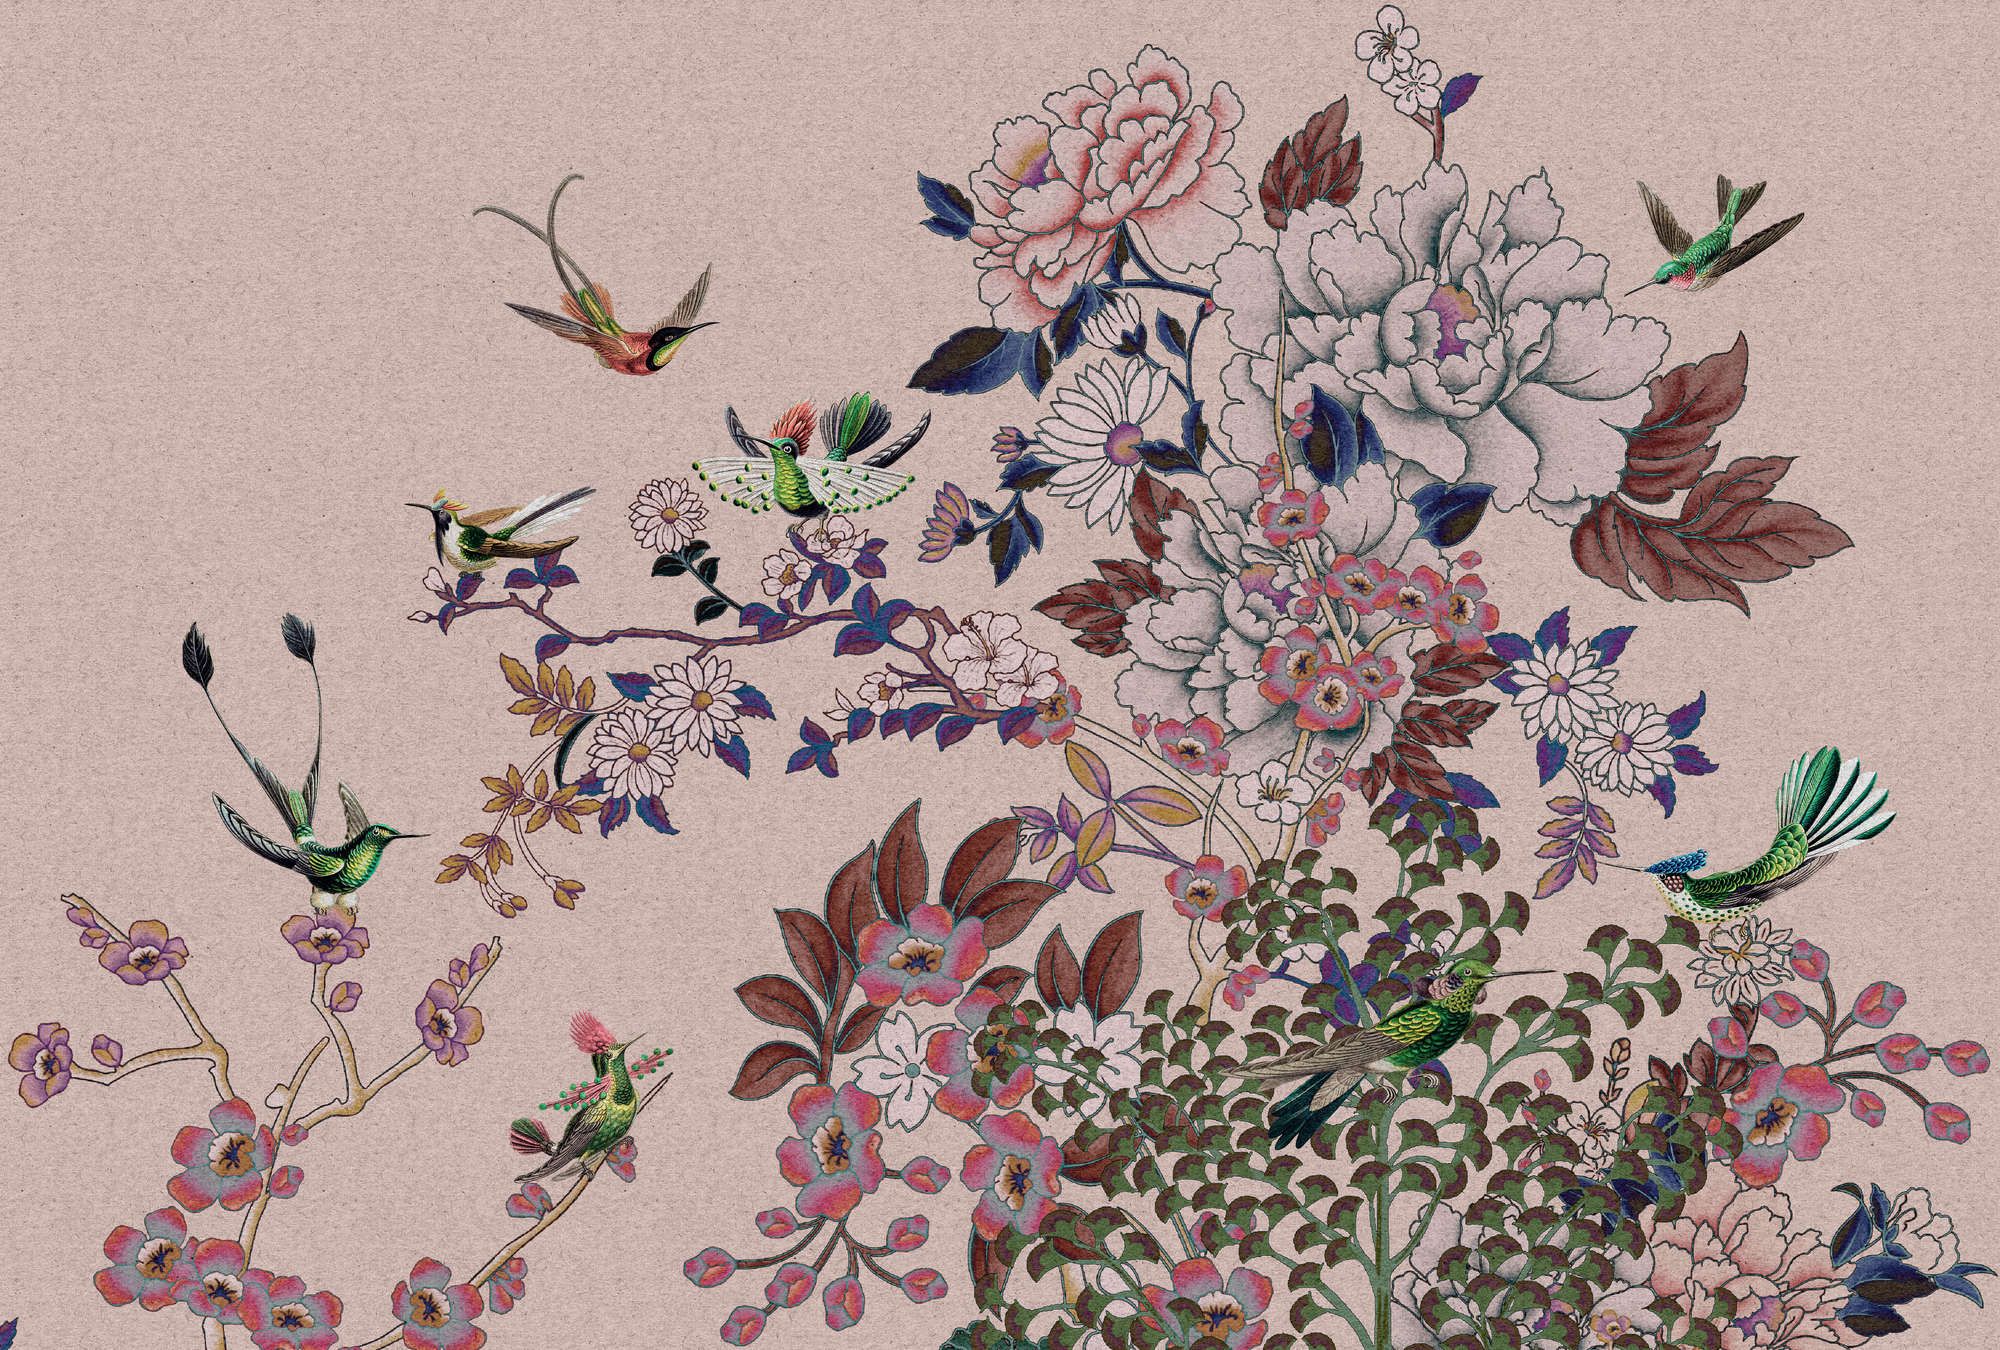             Fotomural »madras 2« - Motivo floral de color rosa con colibríes sobre textura de papel kraft - Tela no tejida de textura ligera
        